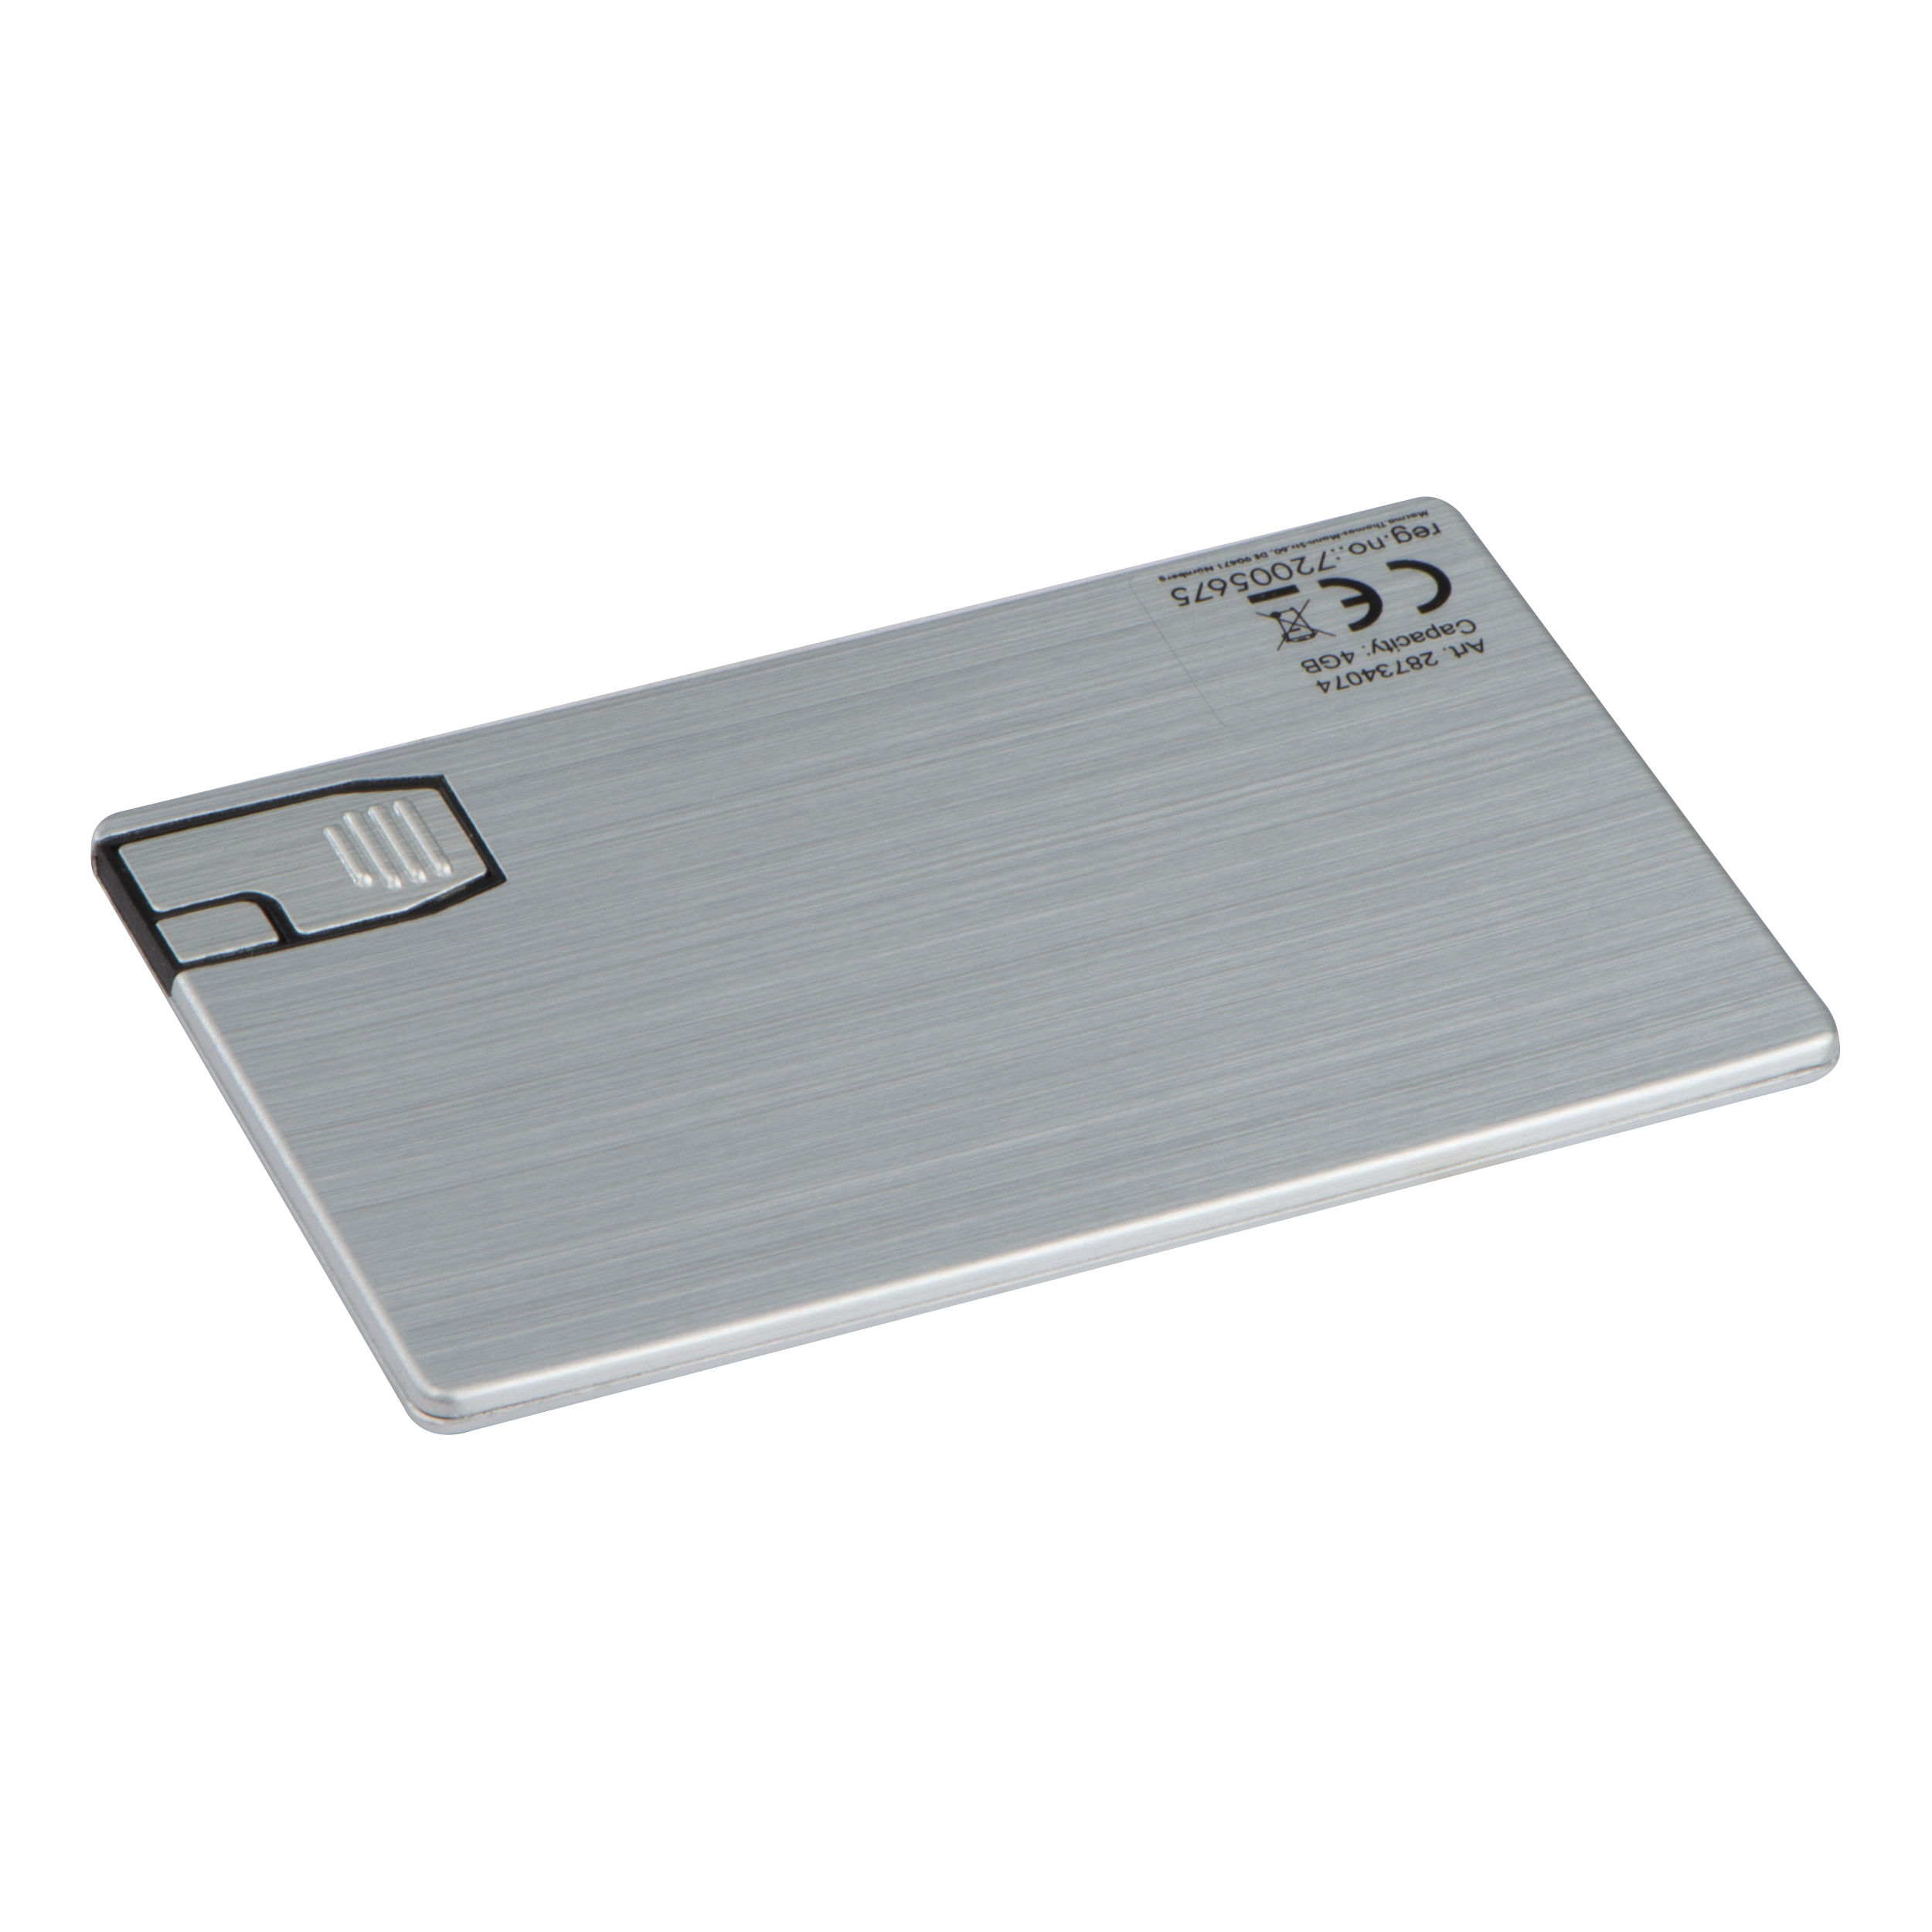 Metal USB Card - Hatfield - Ashford